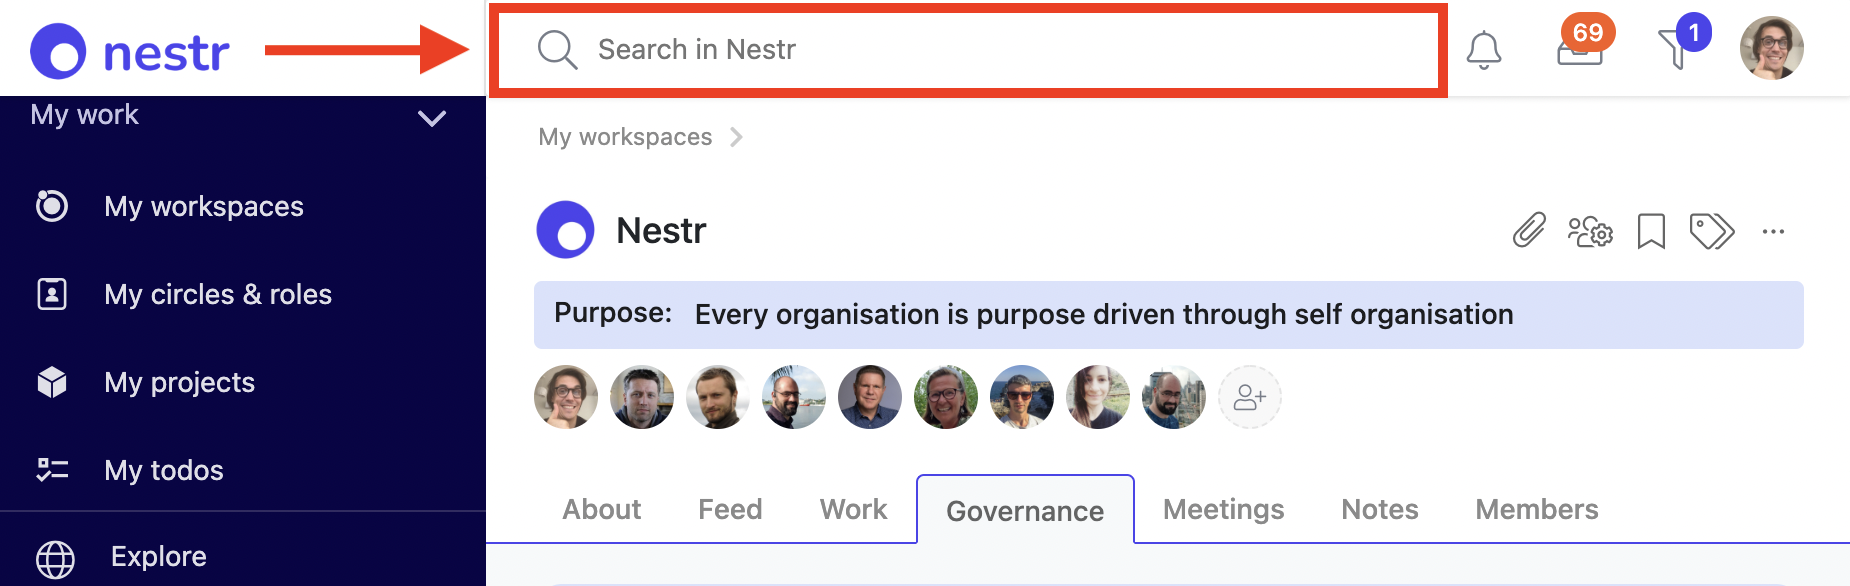 The Nestr search bar